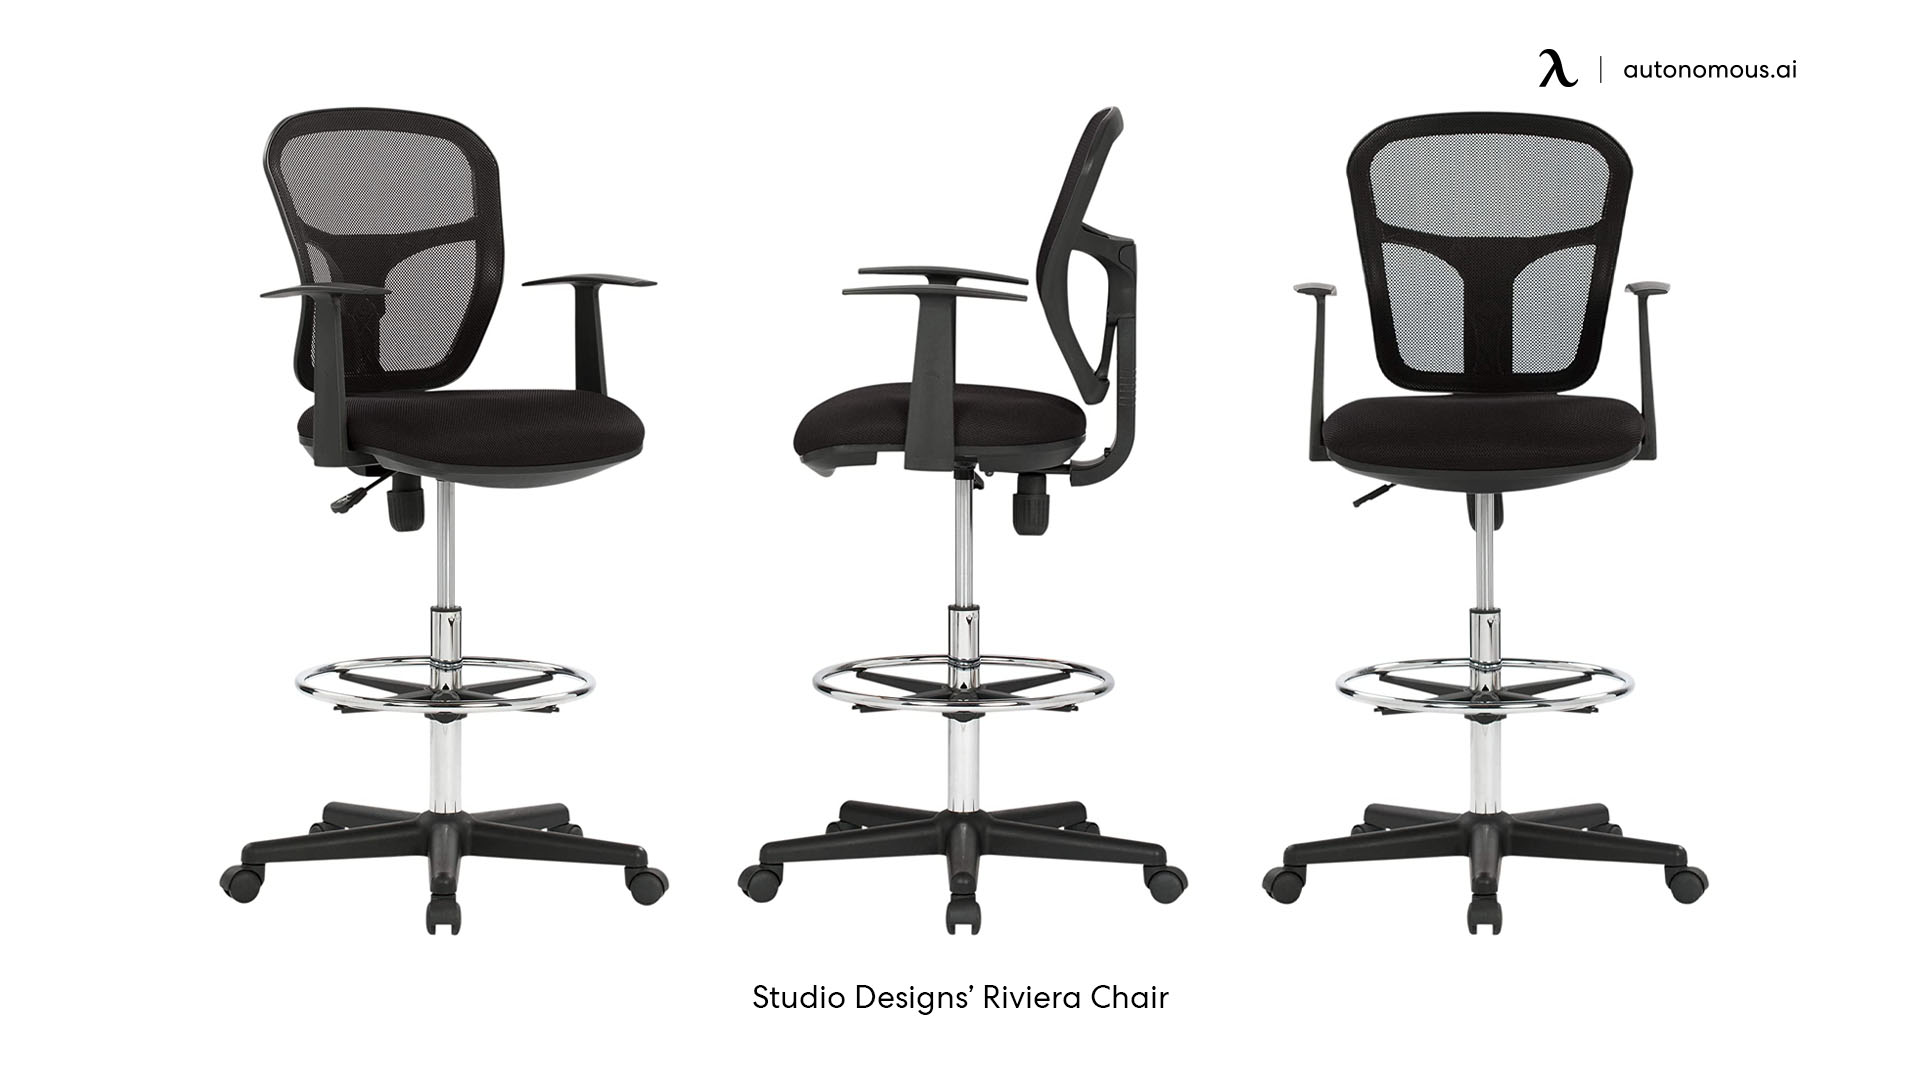 Studio Designs’ Riviera black office desk chair